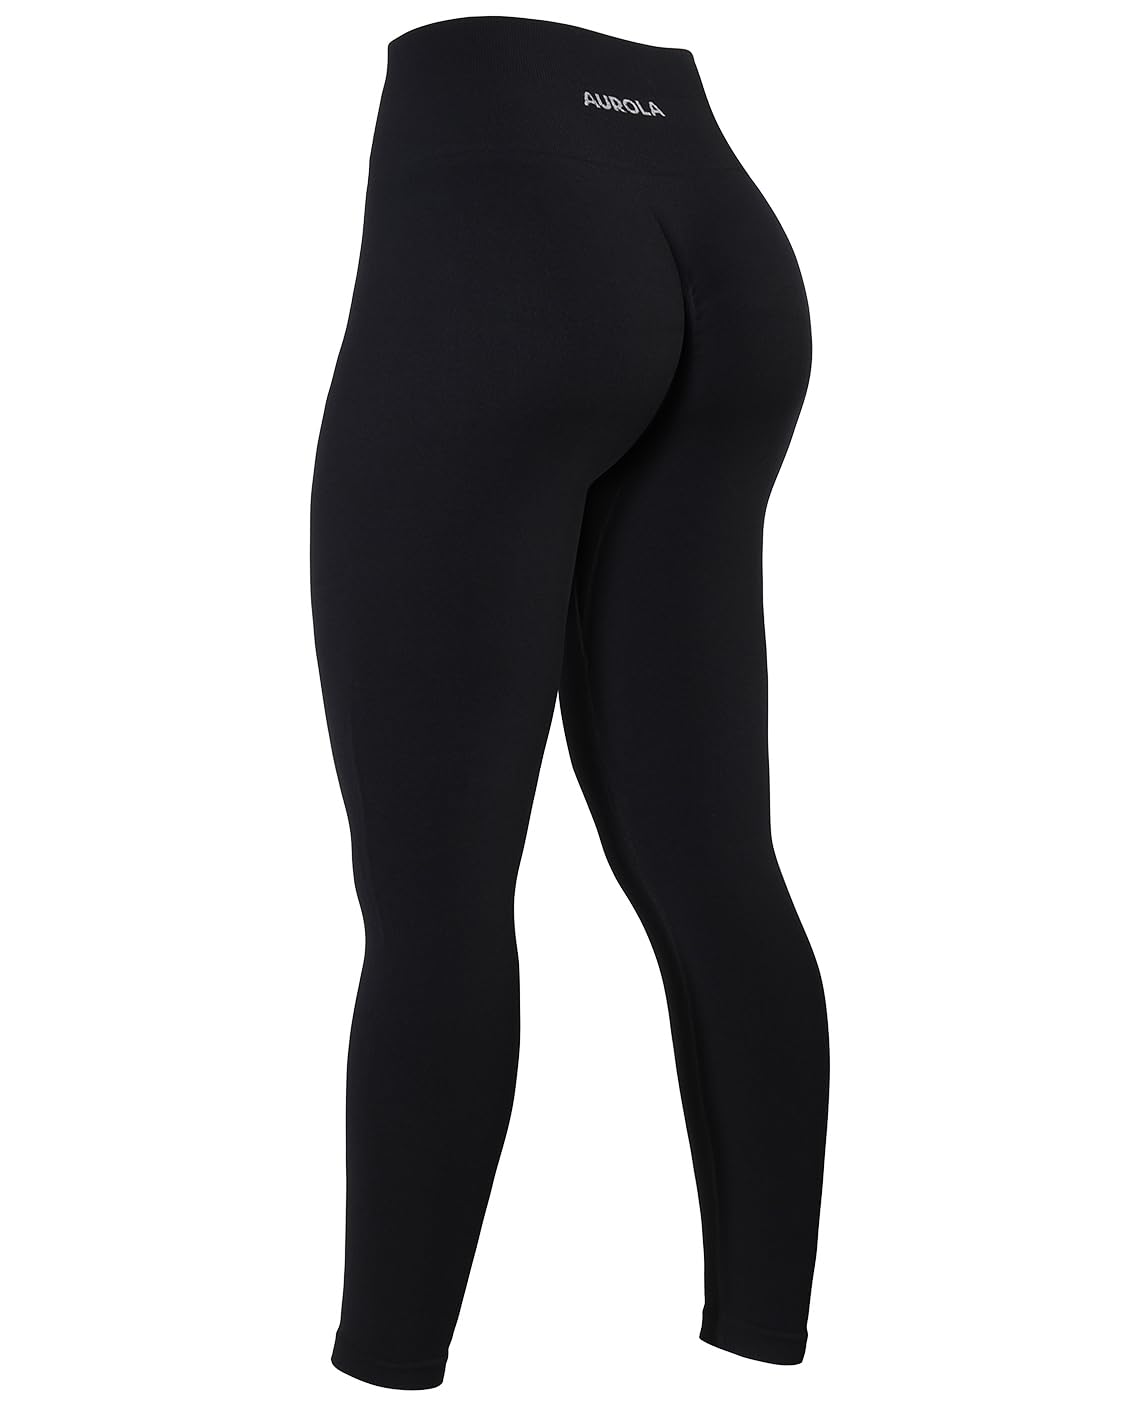 Buy AUROLA Power Workout Leggings for Women Tummy Control Squat